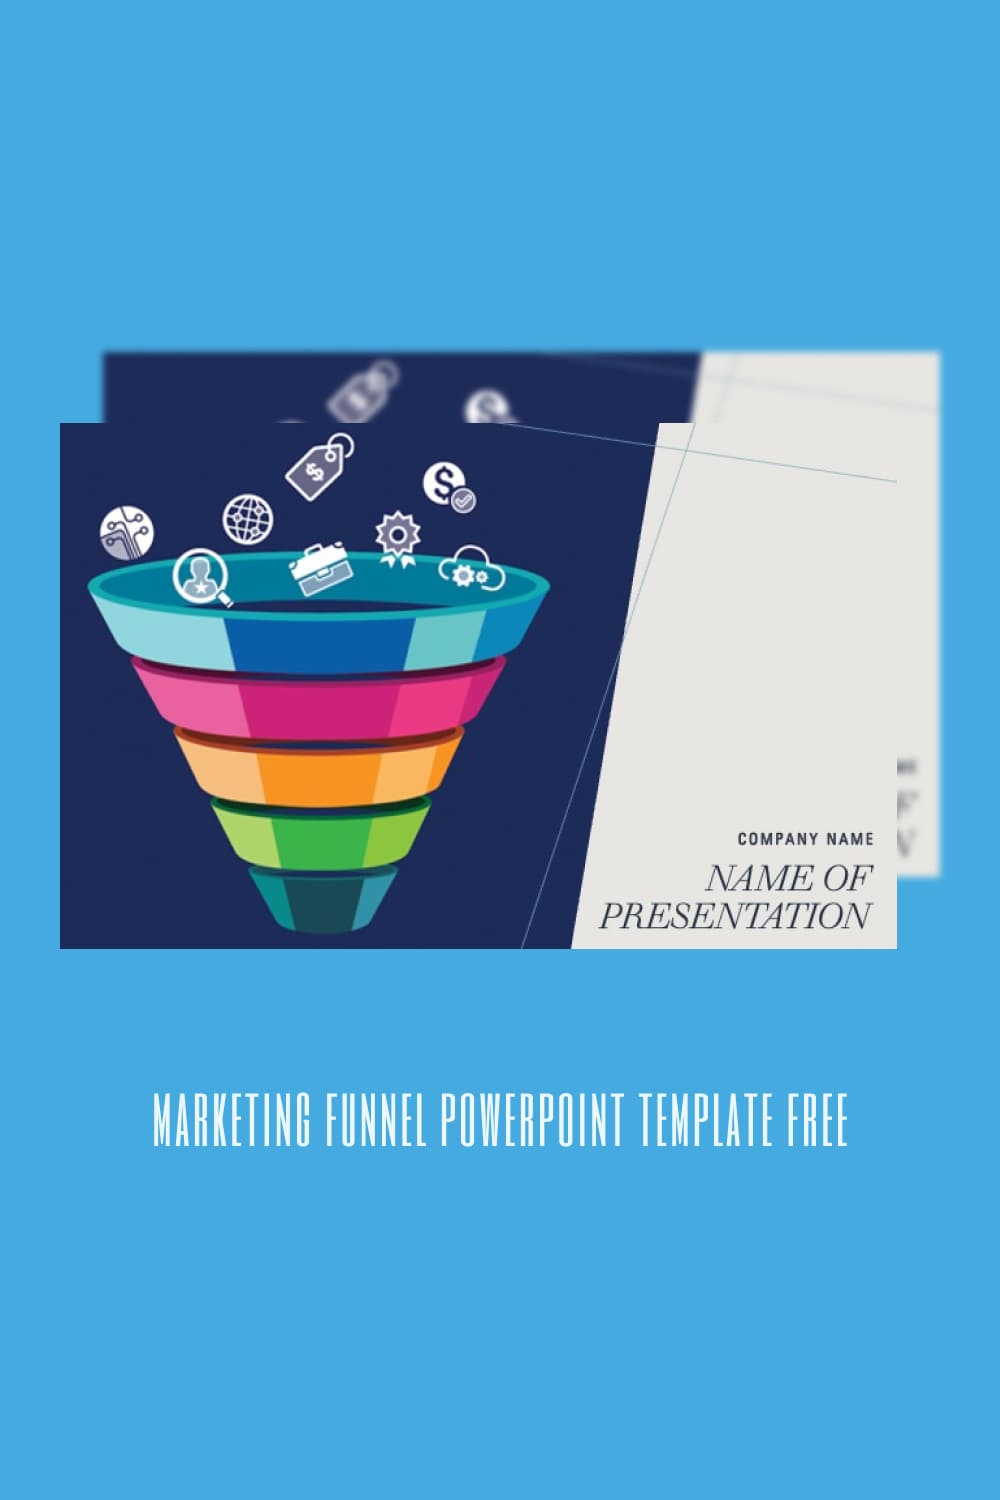 Pinterest Marketing Funnel Powerpoint Template Free.